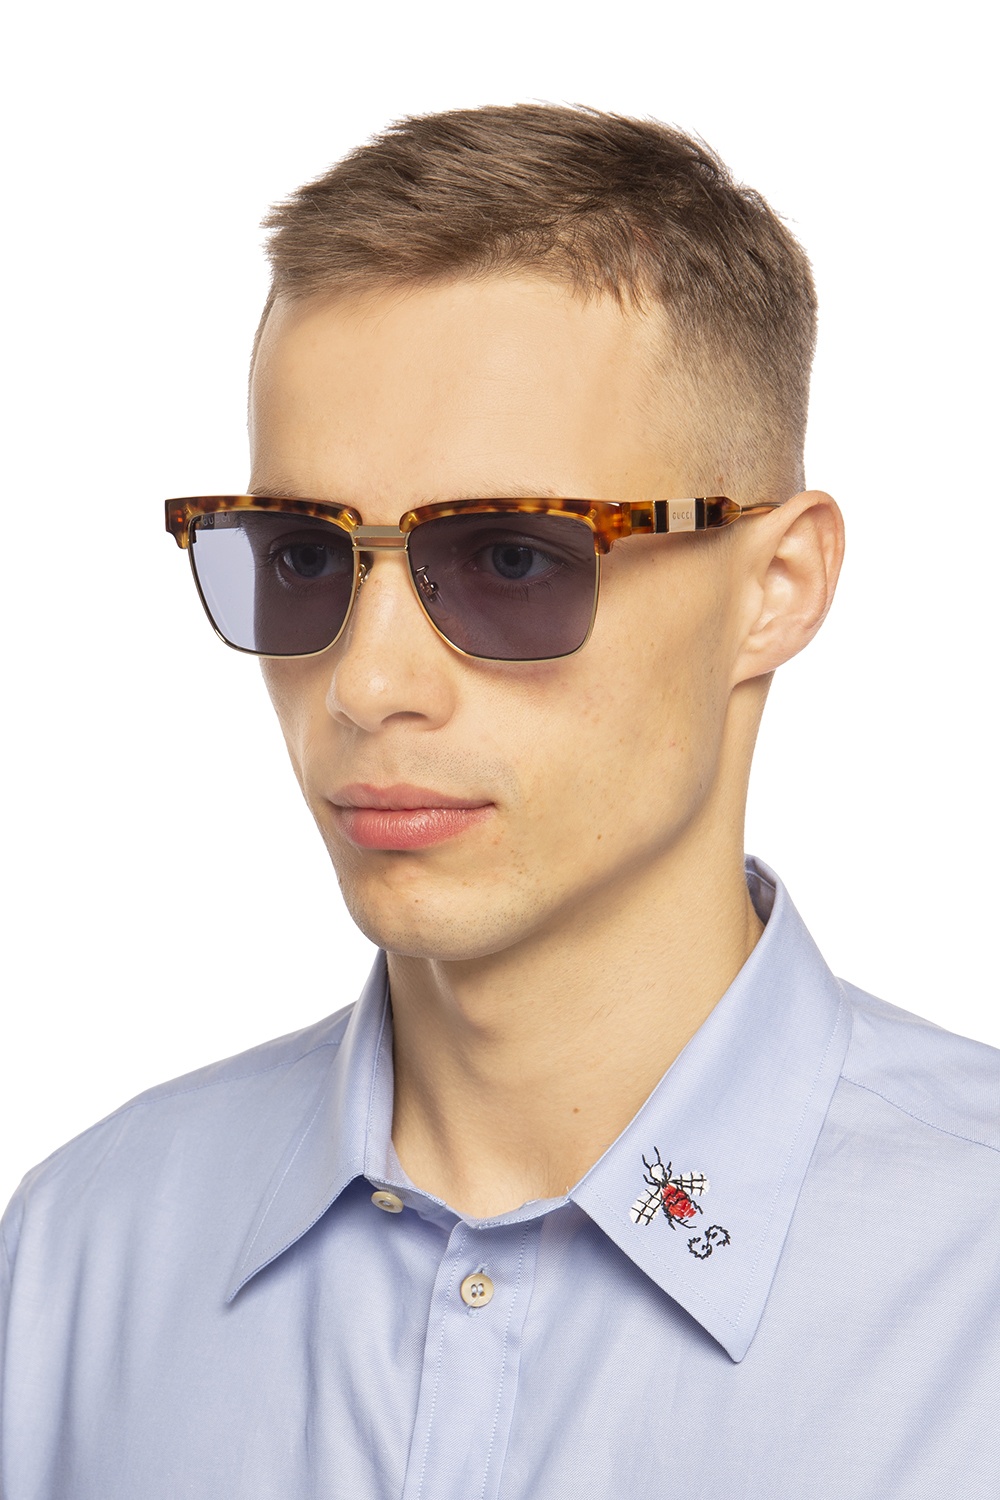 Gucci chpo liam sunglasses item gunmetal black